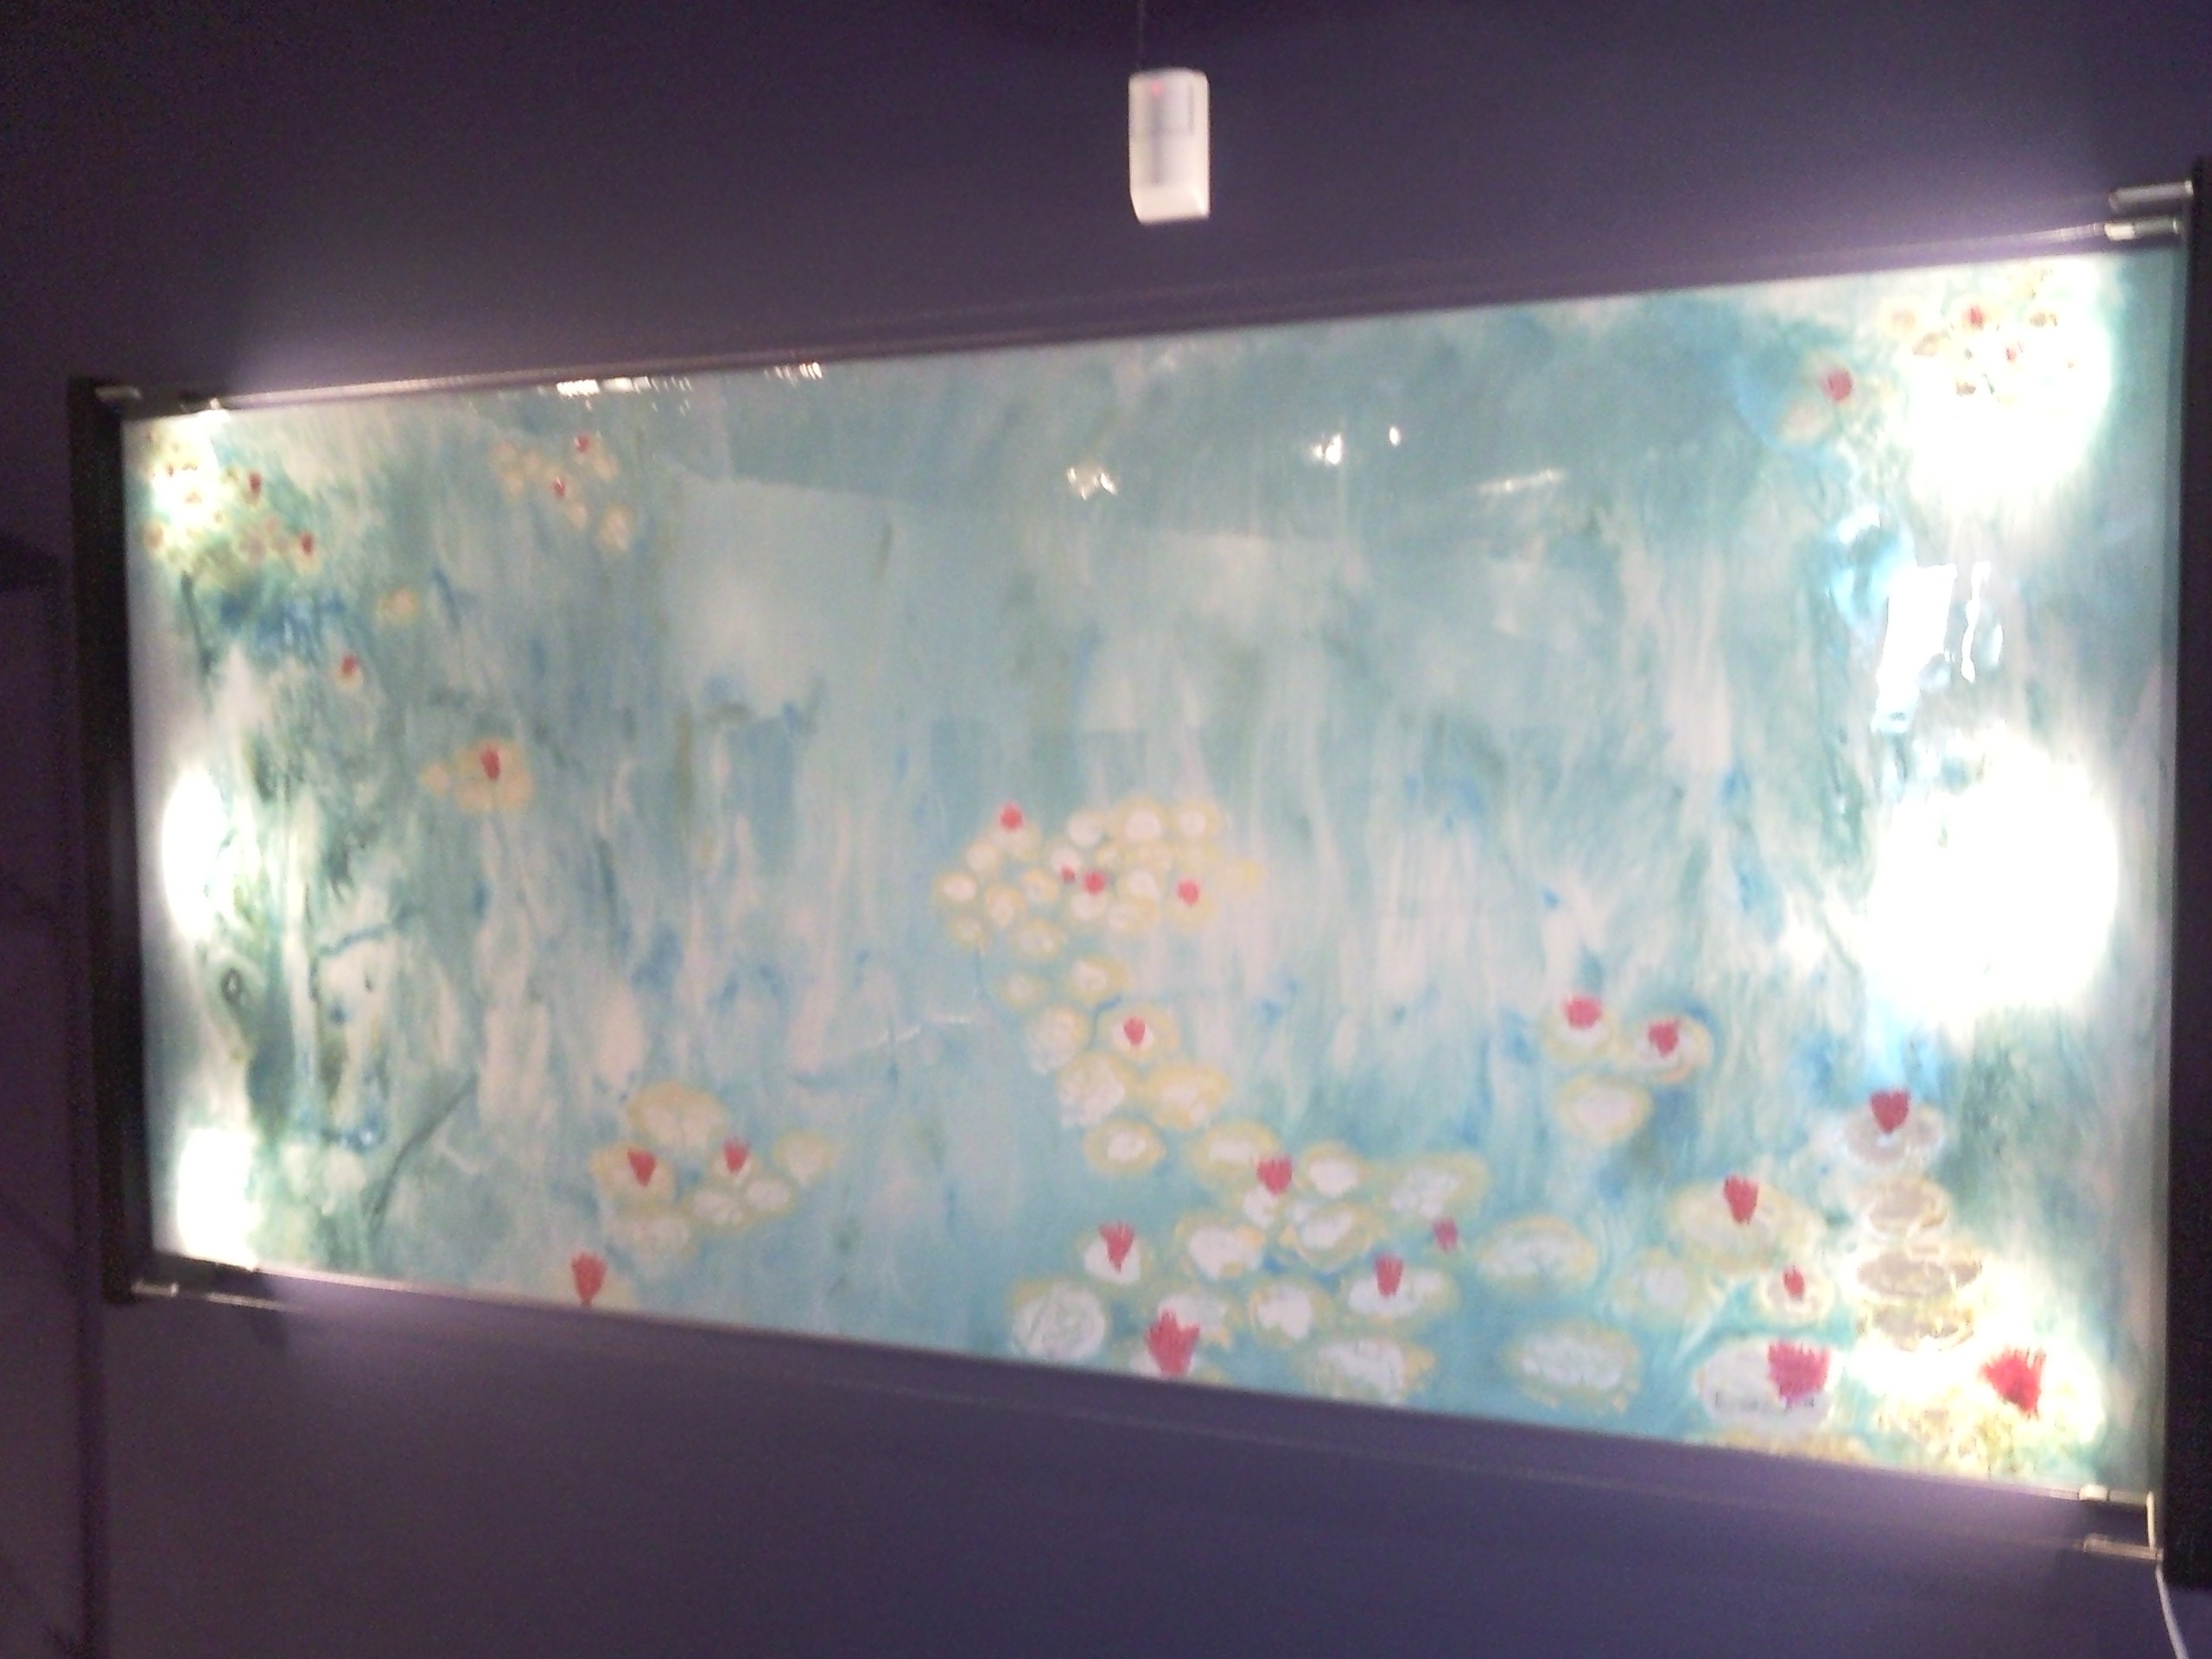 Water Lilies #14, 2010 72"x38", Liquid Plastic, Oil Paint, Porcelain on Glass Sold